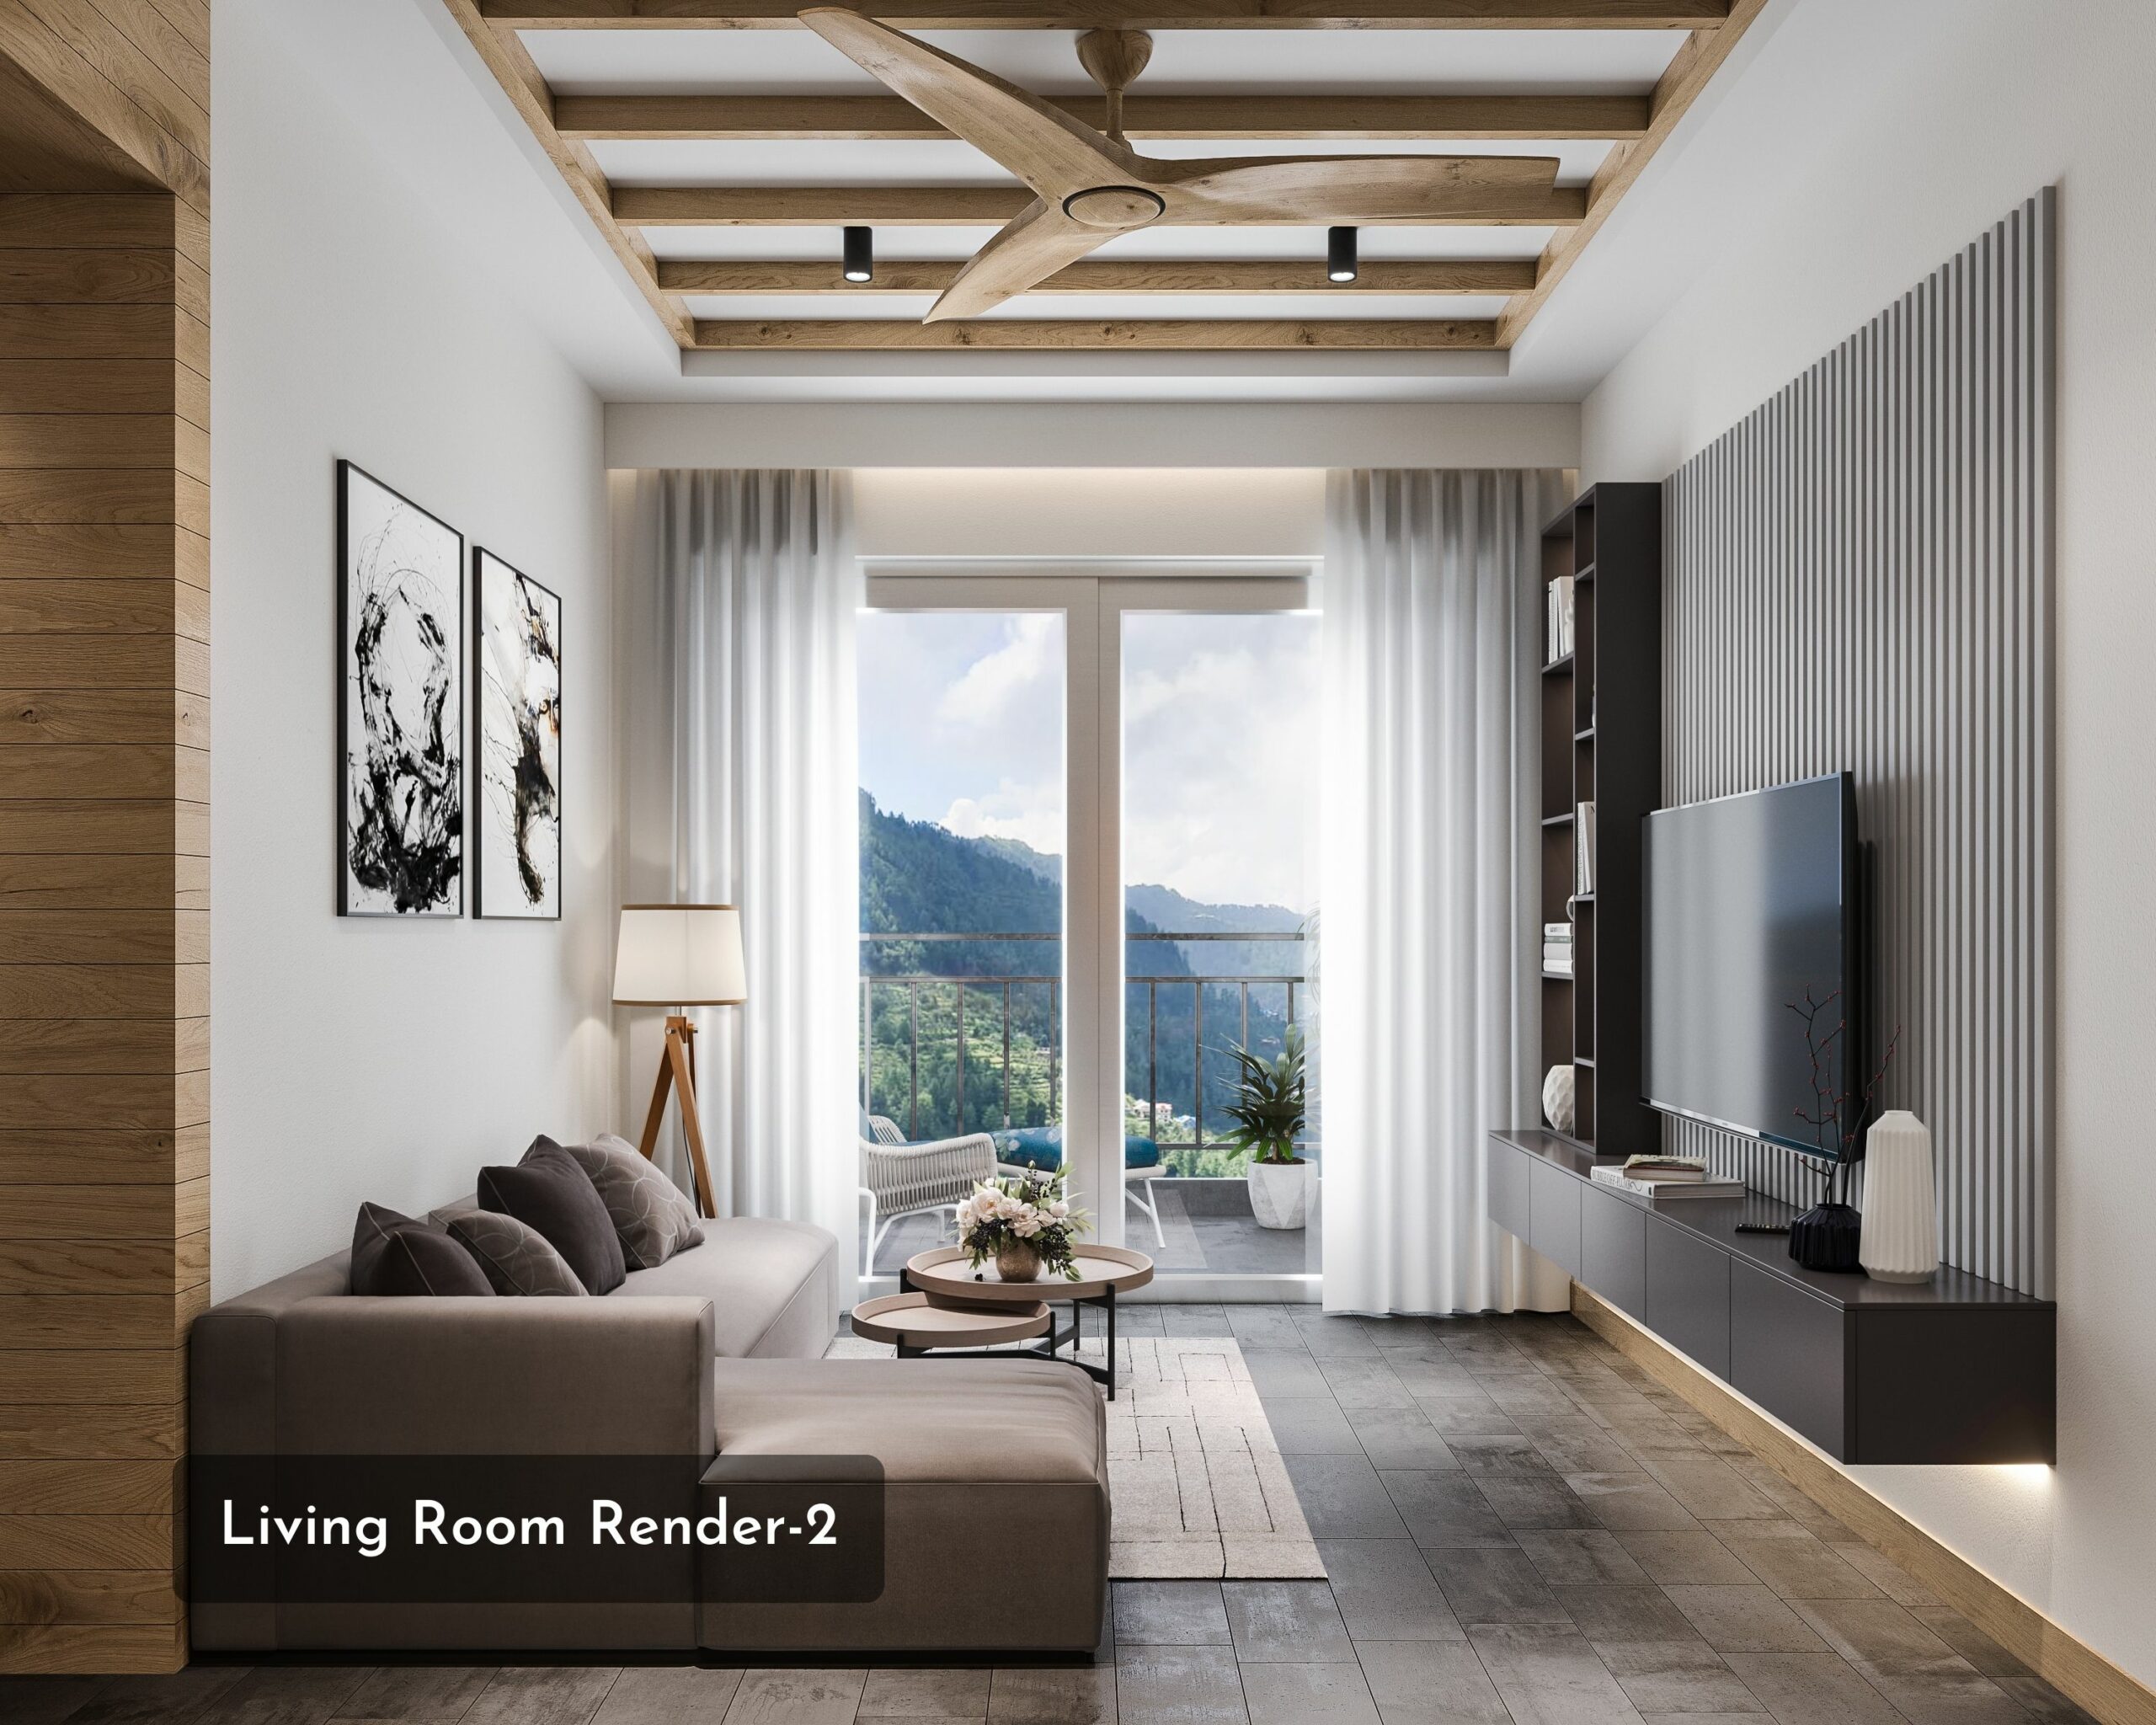 Living Room Render-2